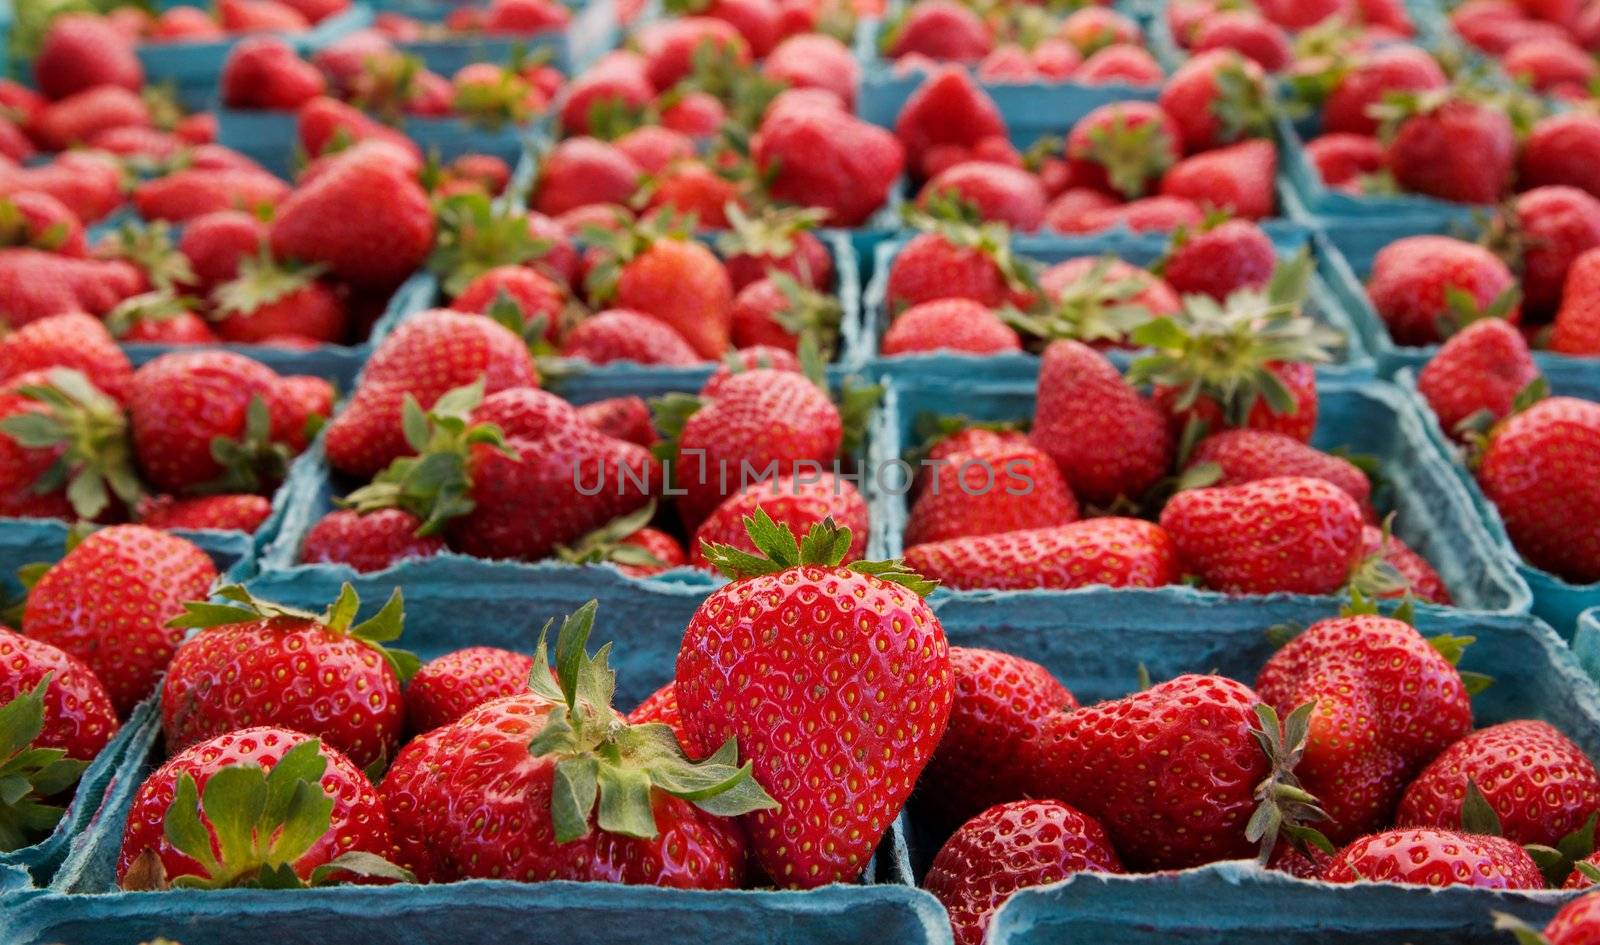 Markets Strawberries by bobkeenan